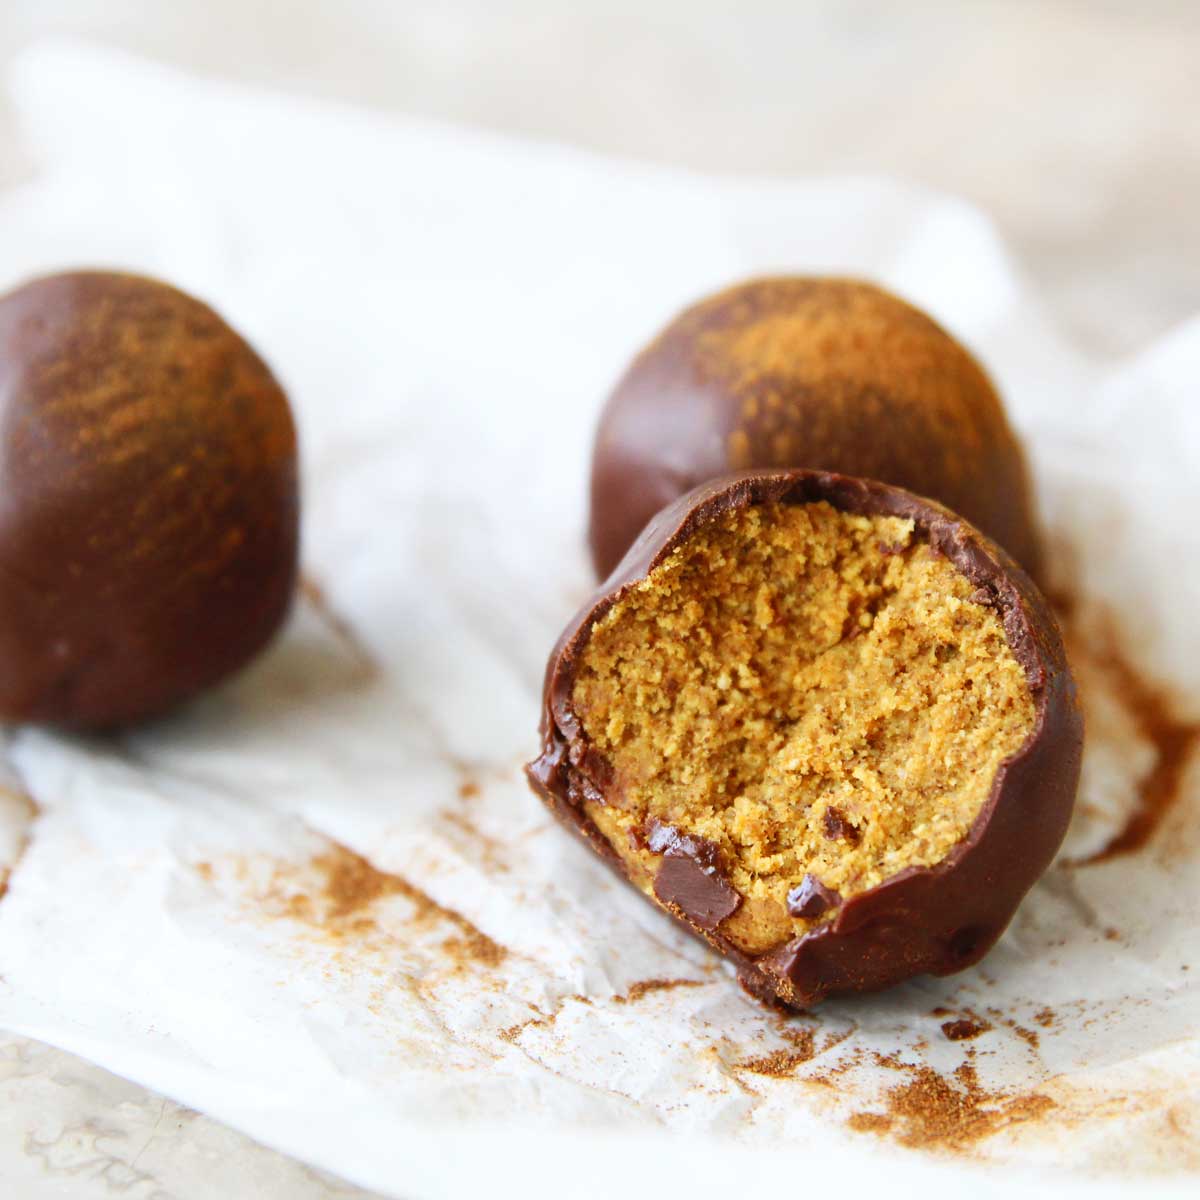 5 Ingredient "Ferrero Rocher" Protein Balls (Healthy, Easy & Vegan) - protein balls